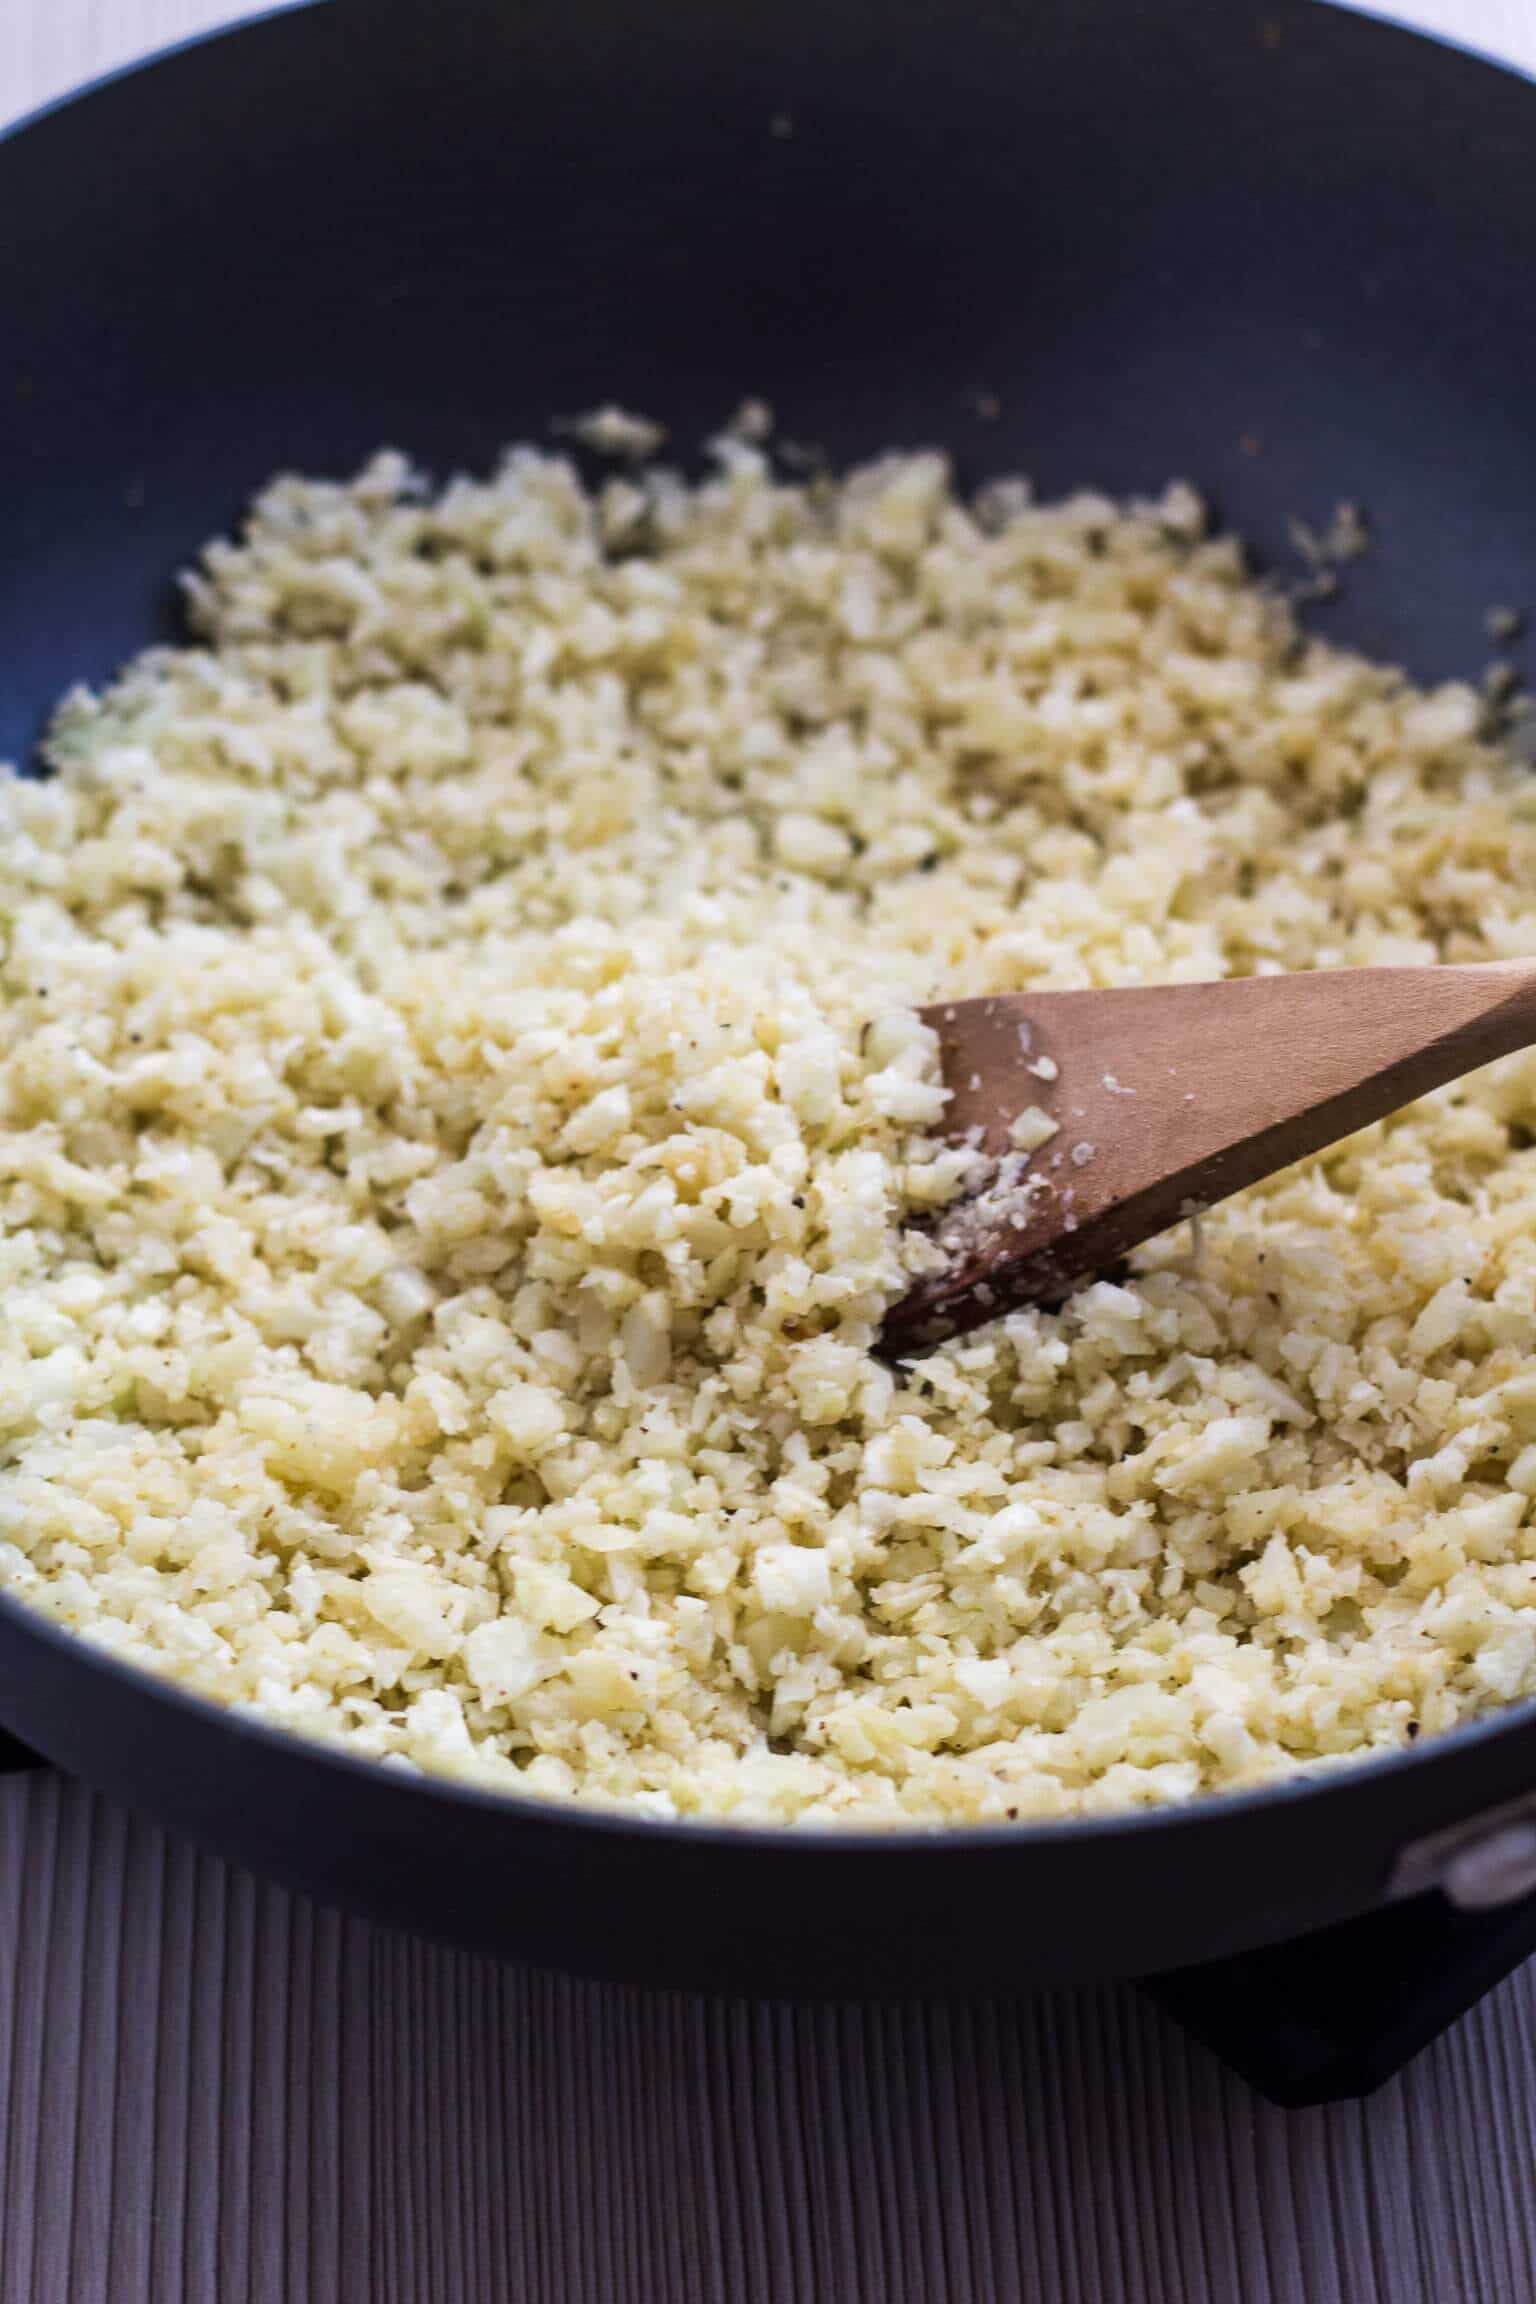 How to make cauliflower rice - Cooking method